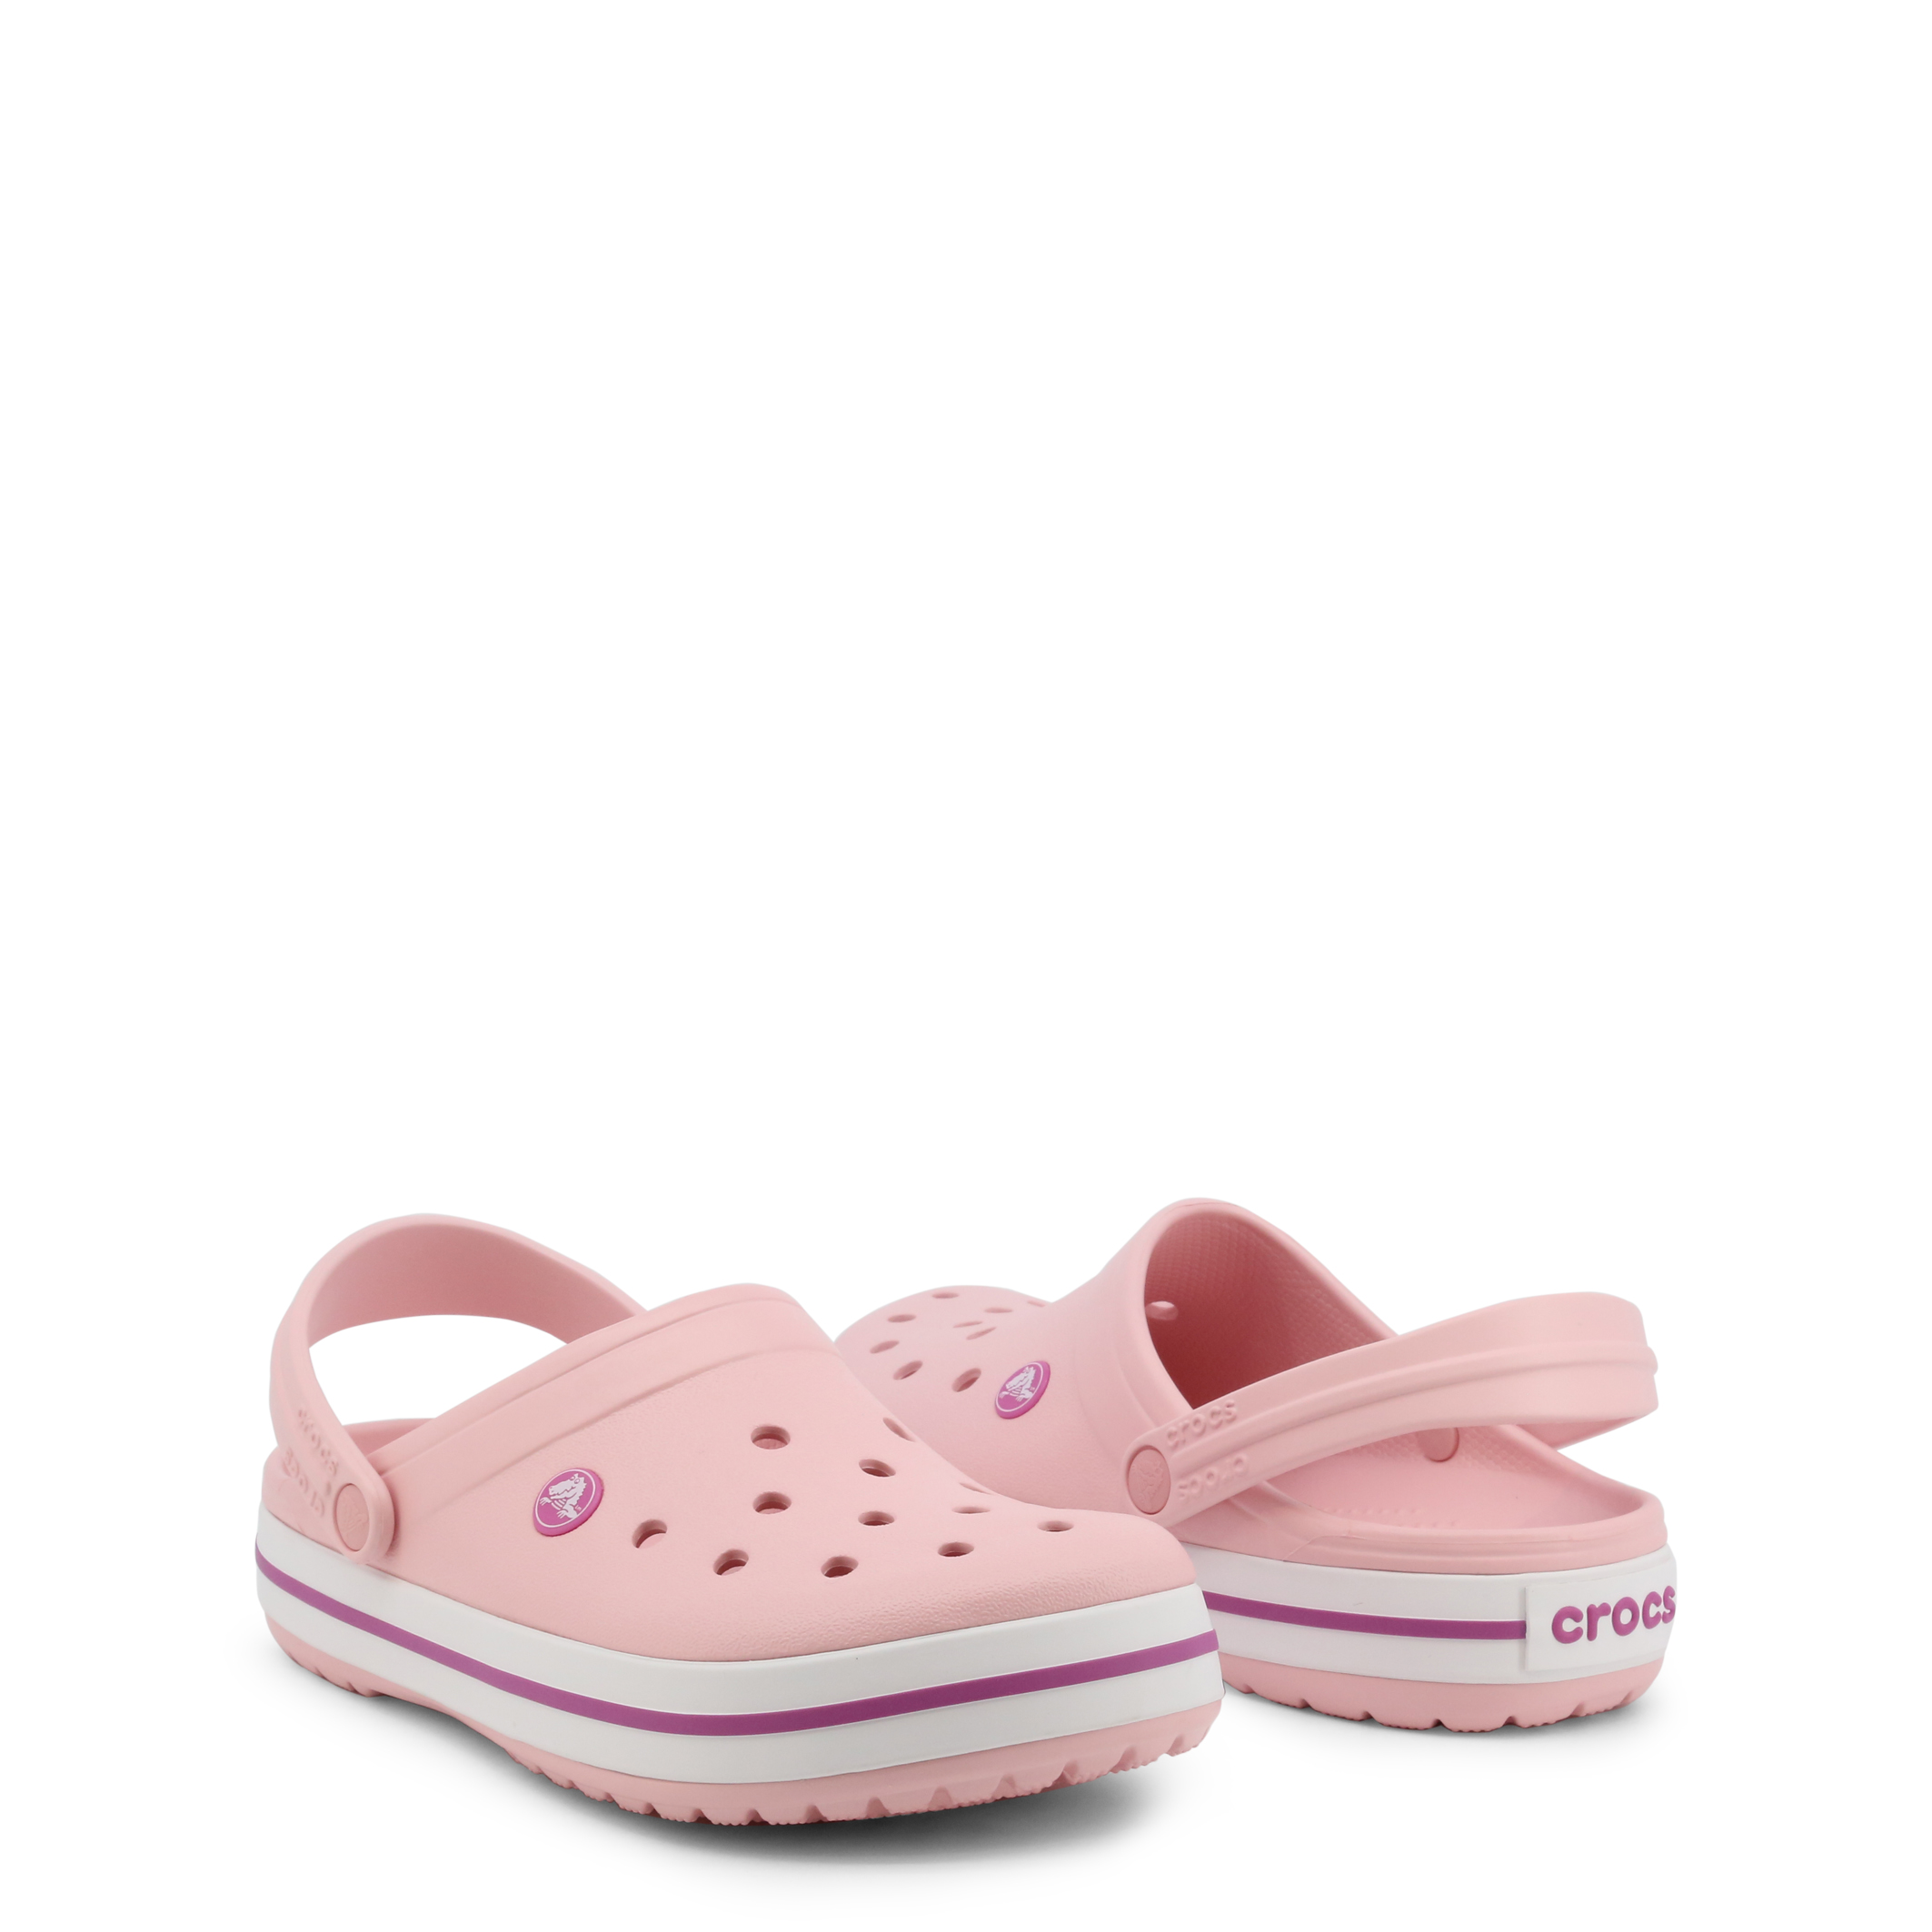 Crocs - 11016 | You Fashion Outlet